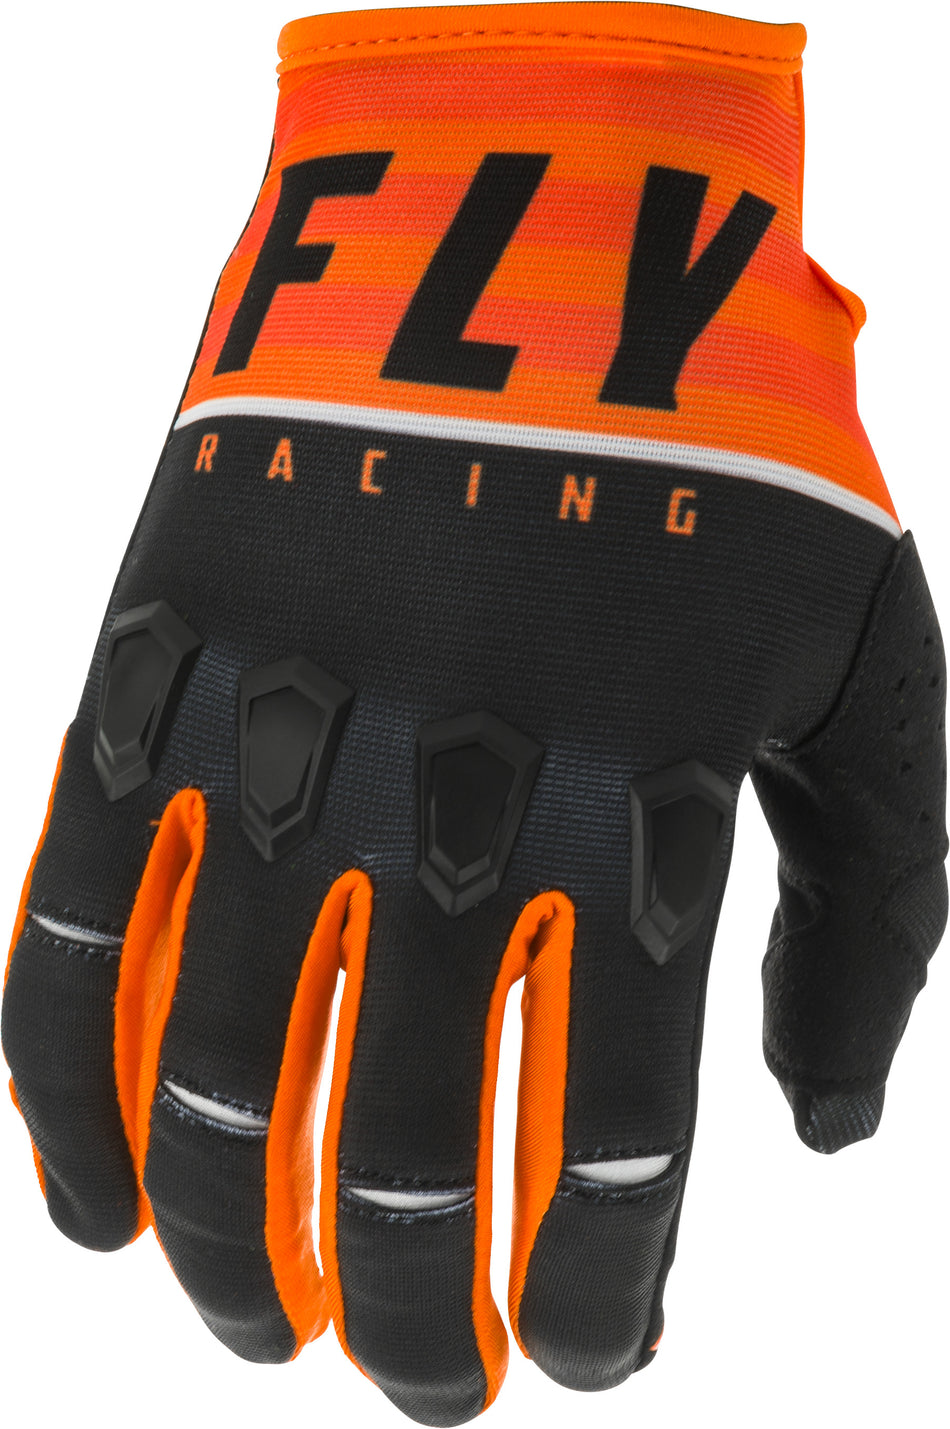 FLY RACING Kinetic K120 Gloves Orange/Black/White Sz 10 373-41710